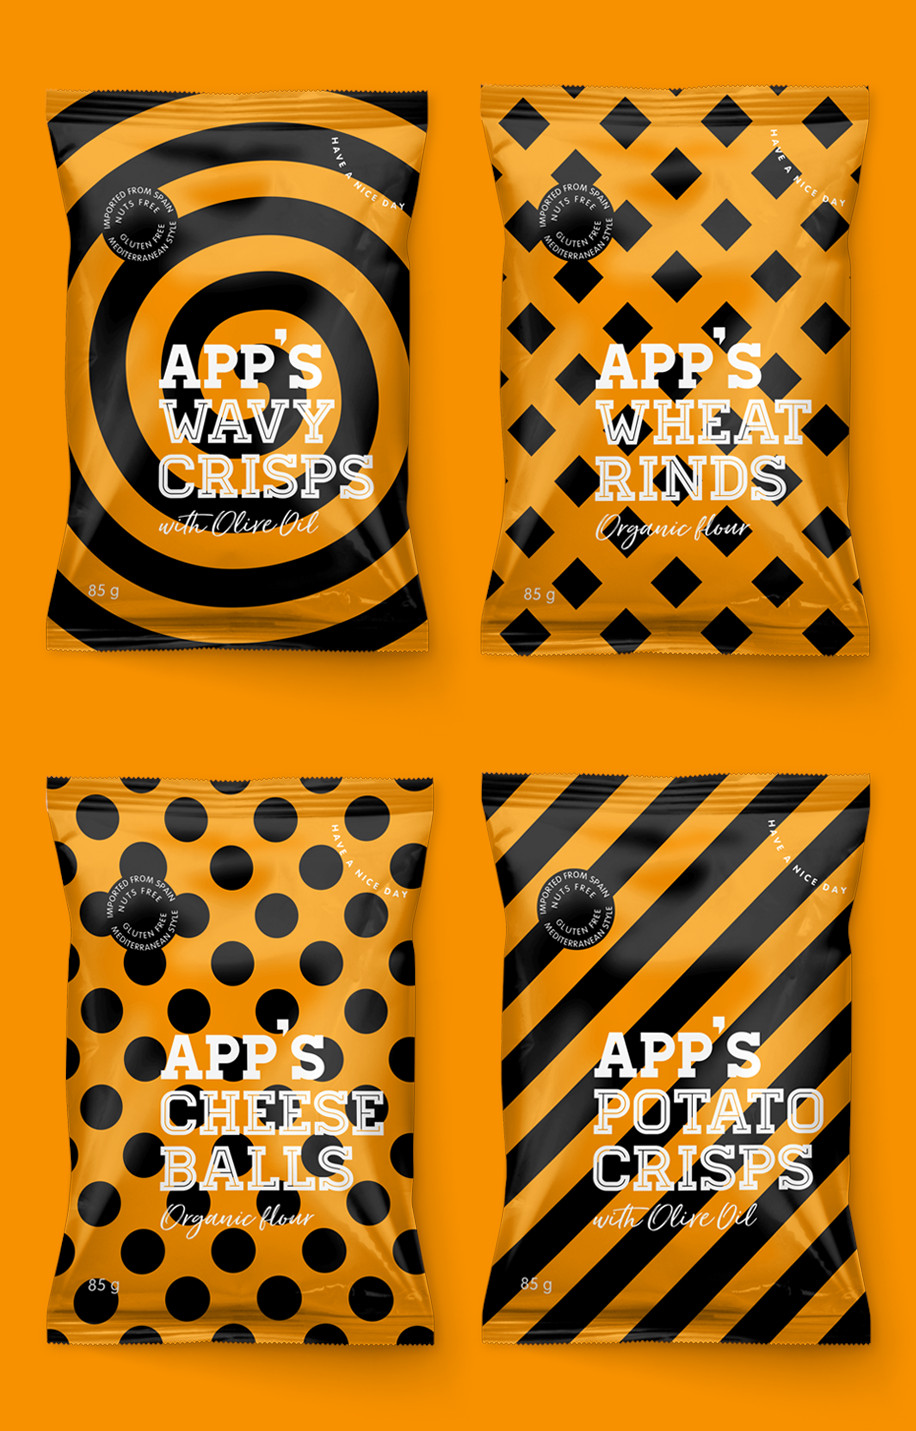 App's Diseño Packaging Snack Wavy Crisps Wheat Rinds Potato Crisps Cheese Balls